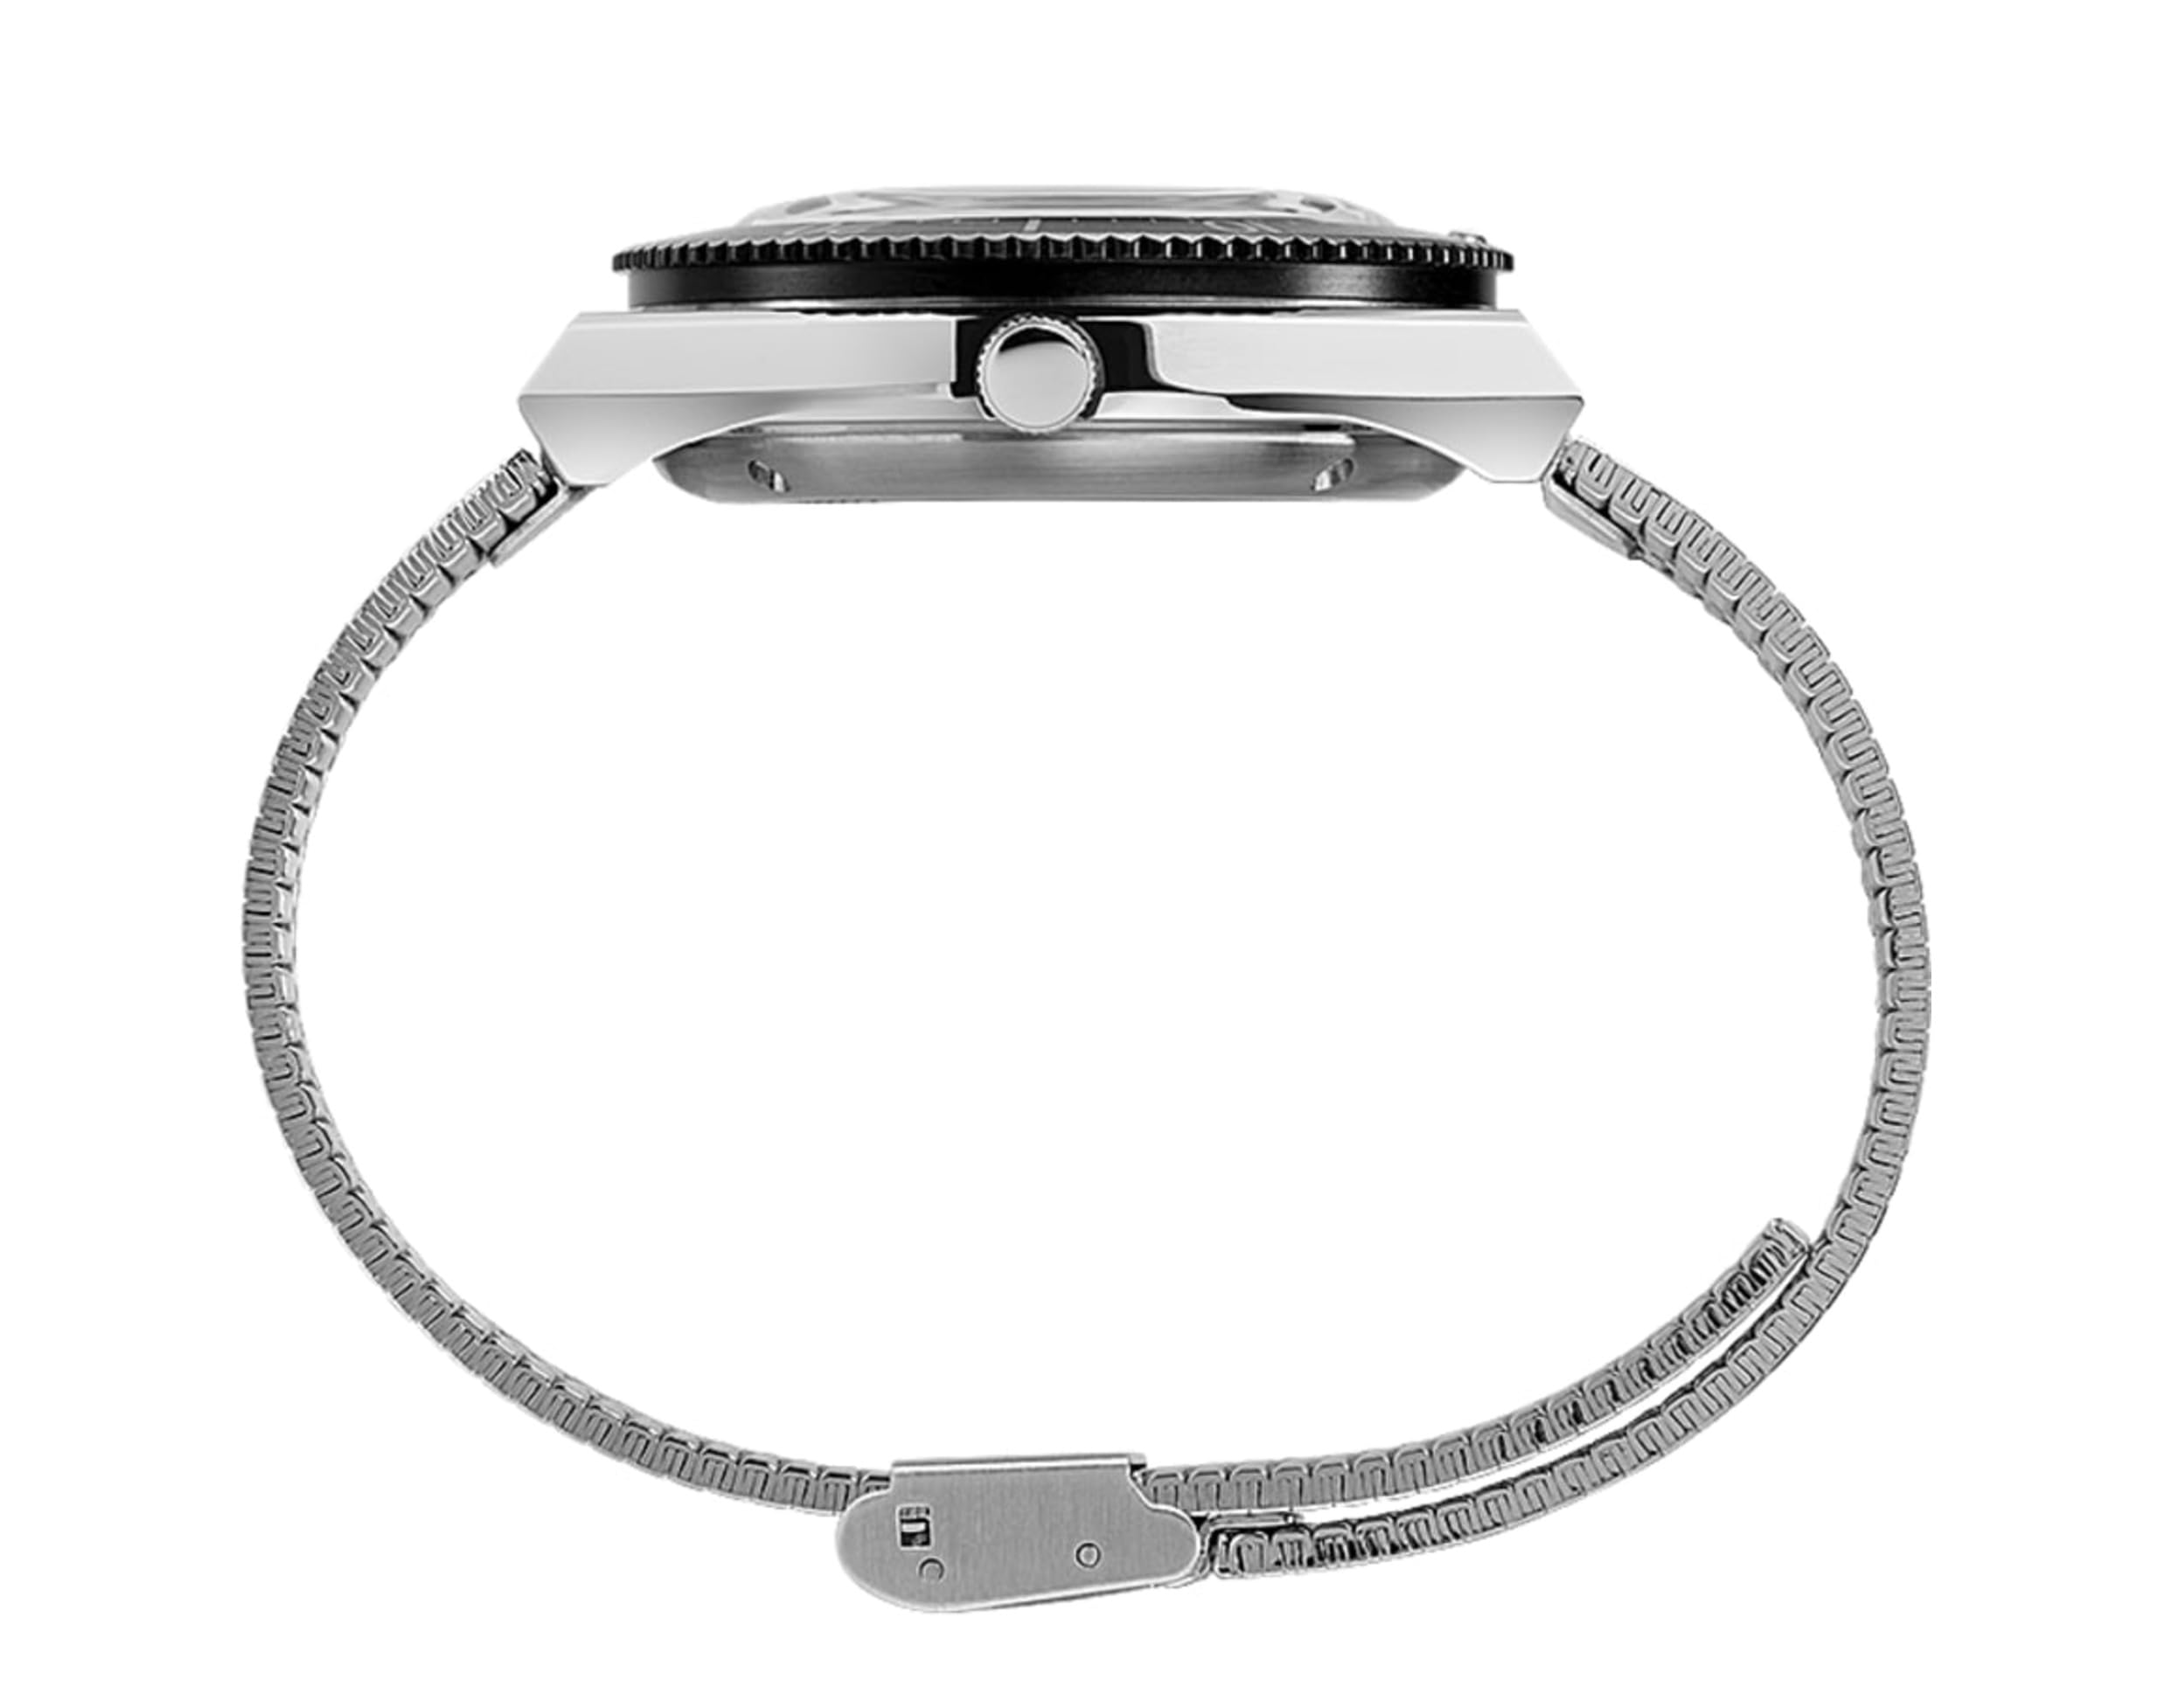 Timex M79 Automatic Bracelet